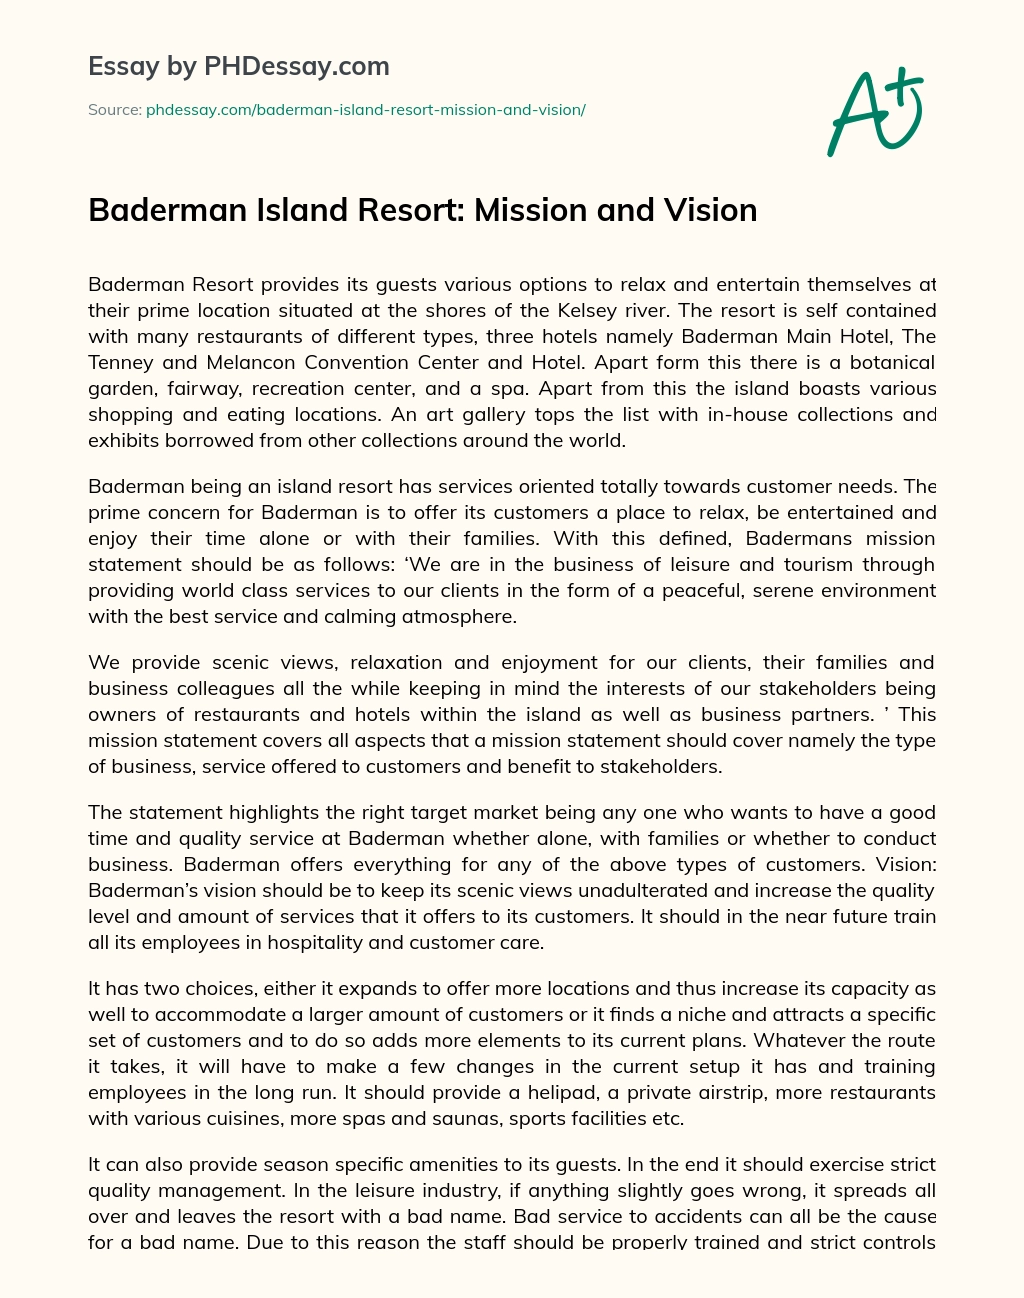 Baderman Island Resort: Mission and Vision essay